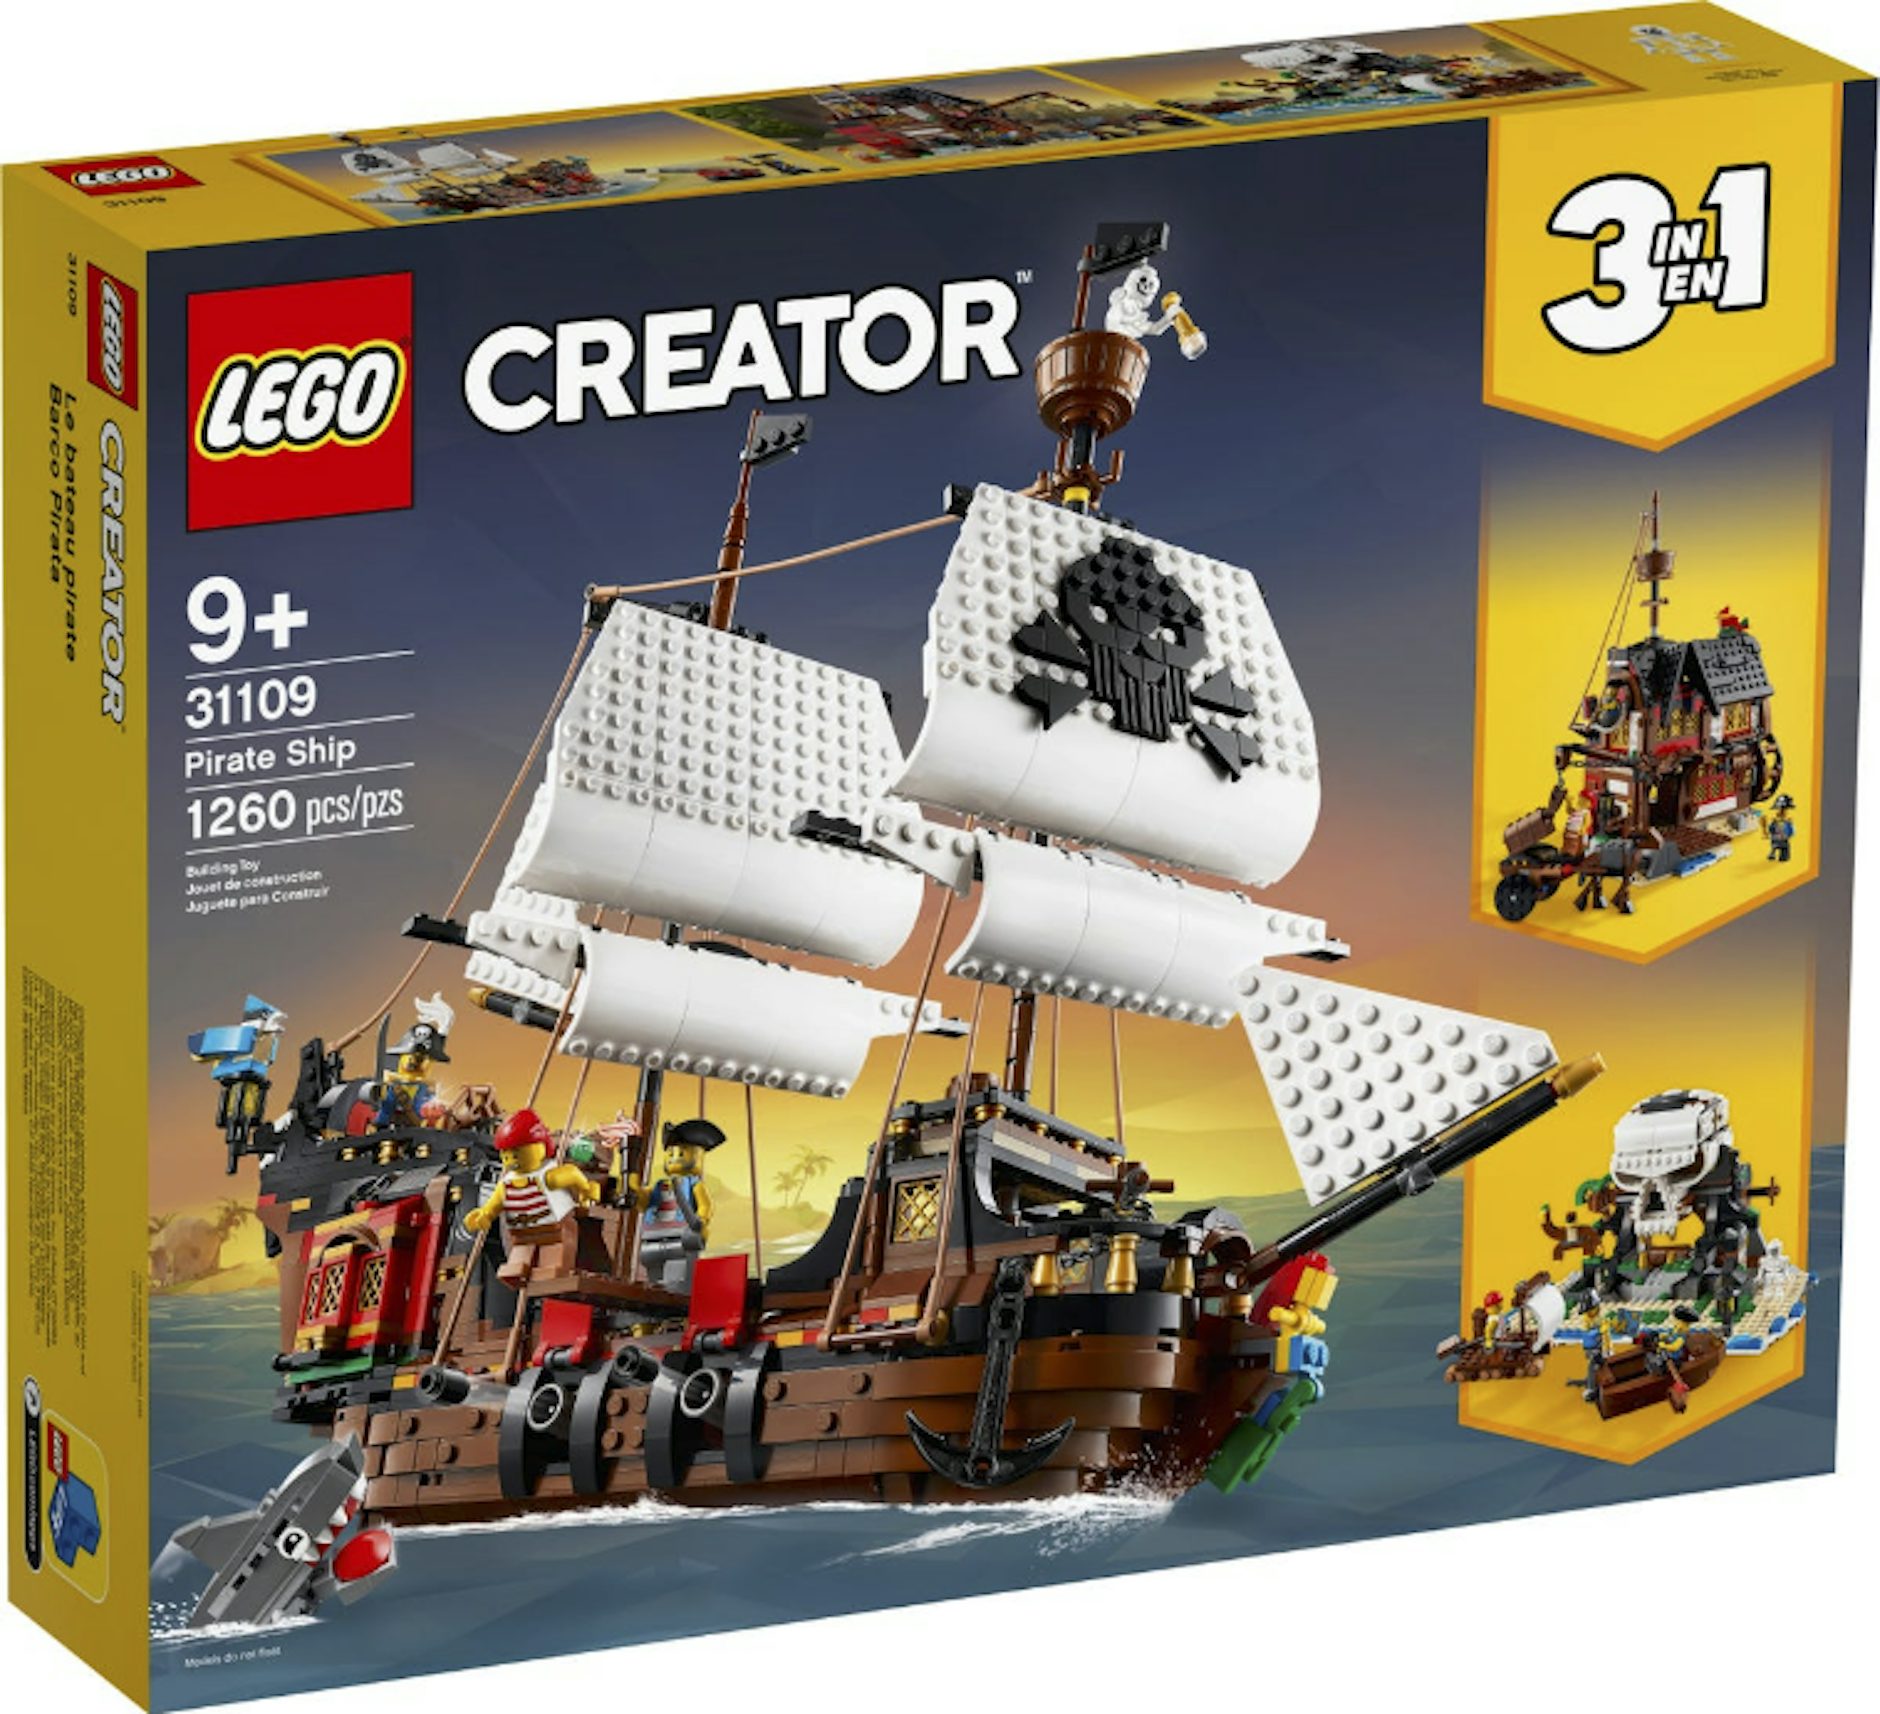 LEGO Creator Christmas Tree Set 30186 - US